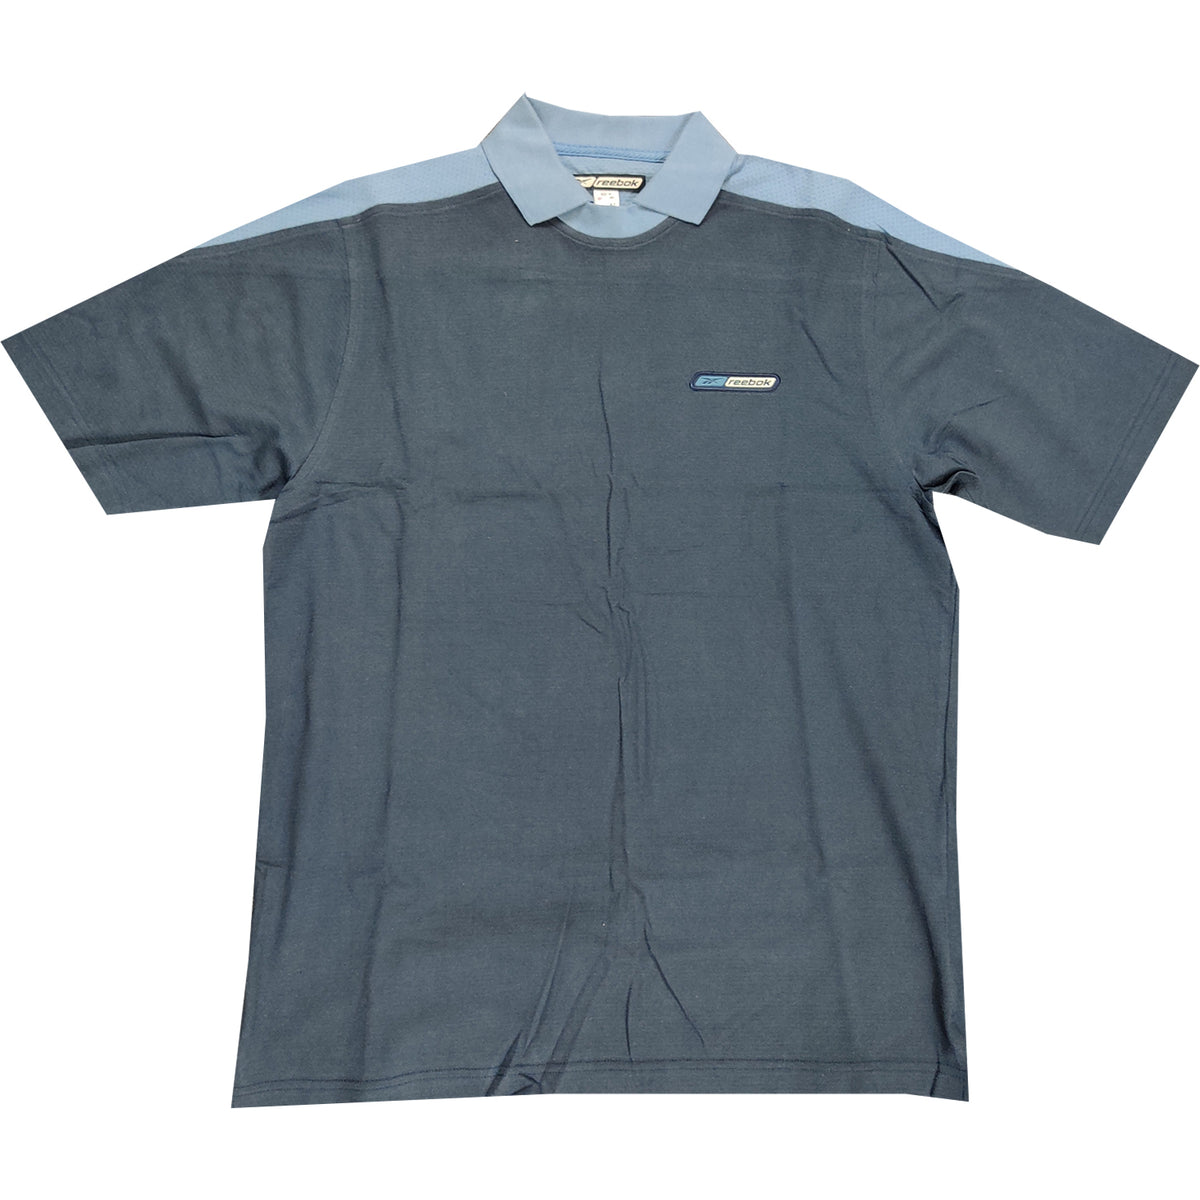 Reebok Mens Clearance Navy Contrast Collar T-Shirt - Medium